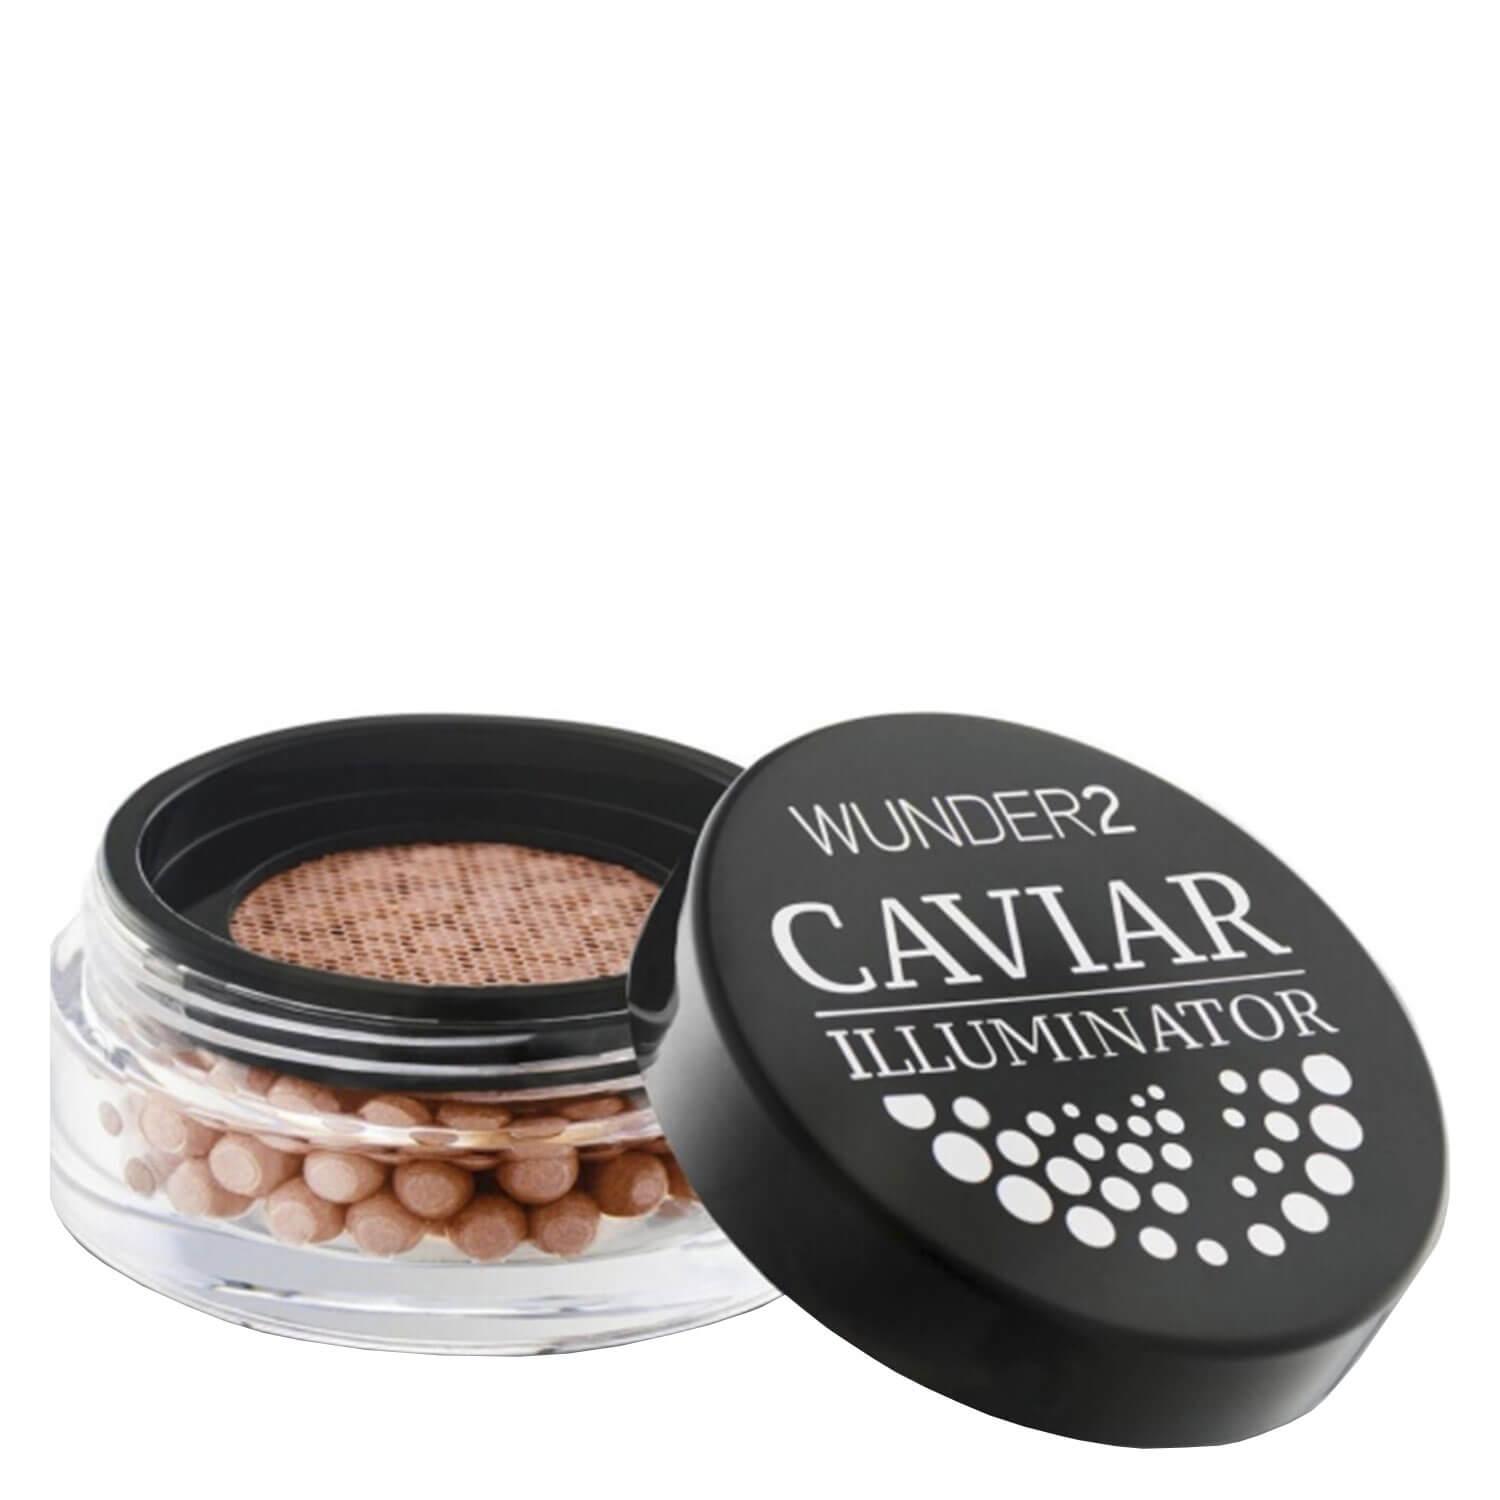 WUNDER2 - Caviar Illuminator